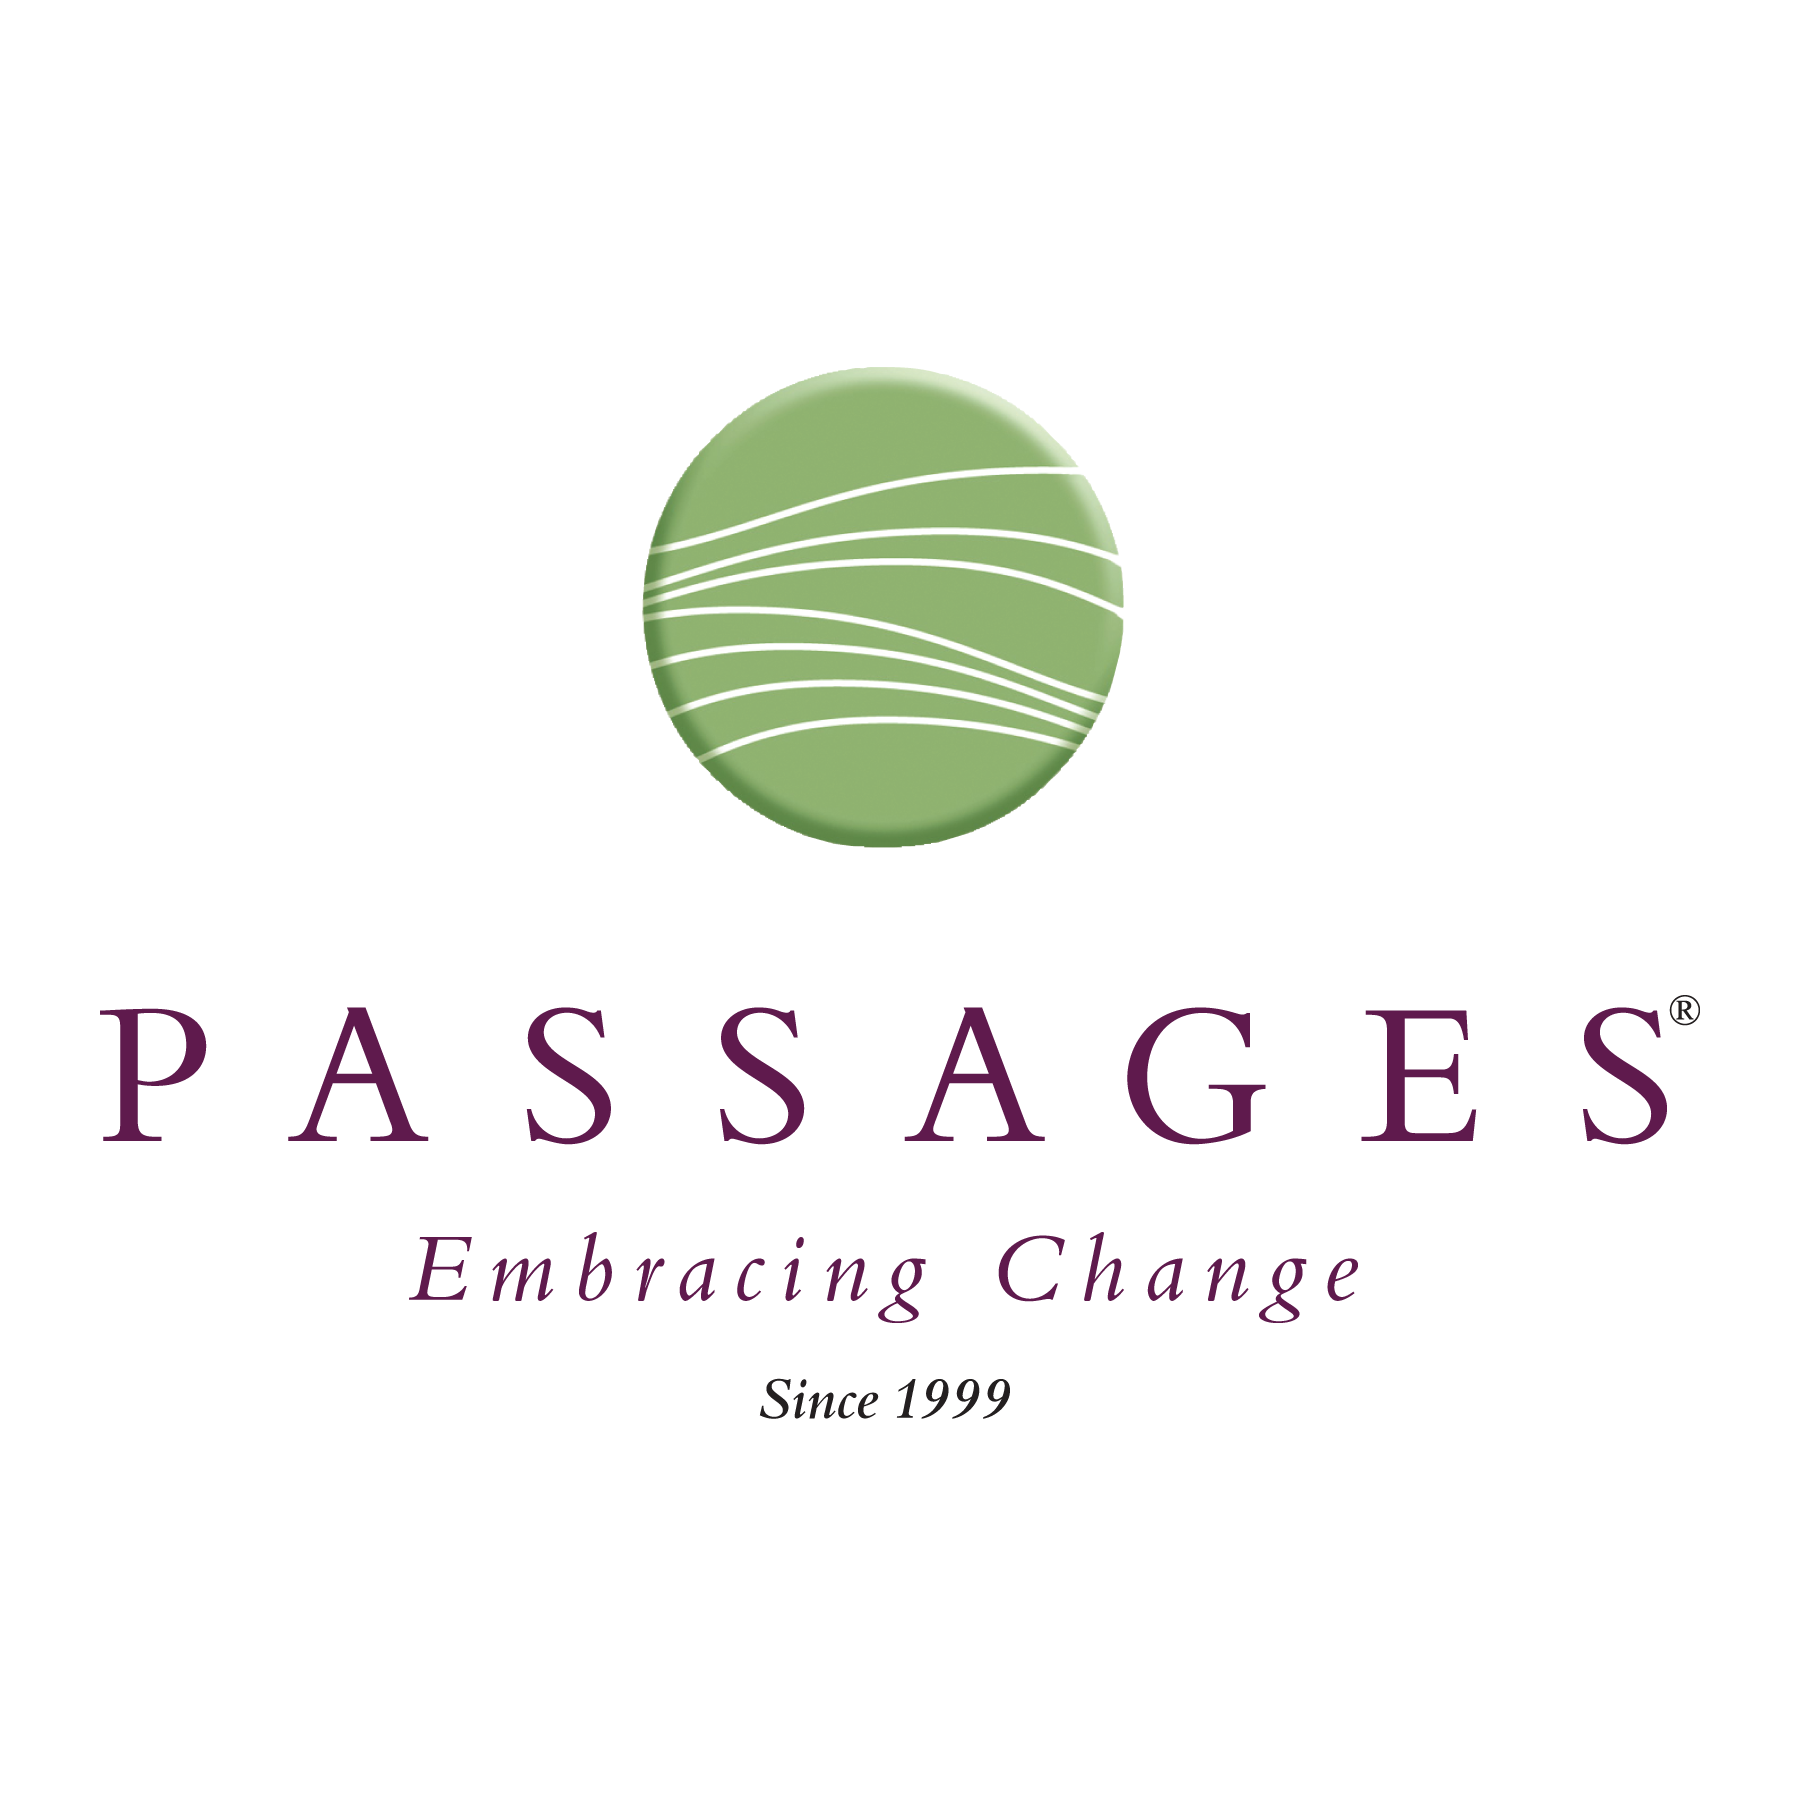 Passages Logo GeoTag